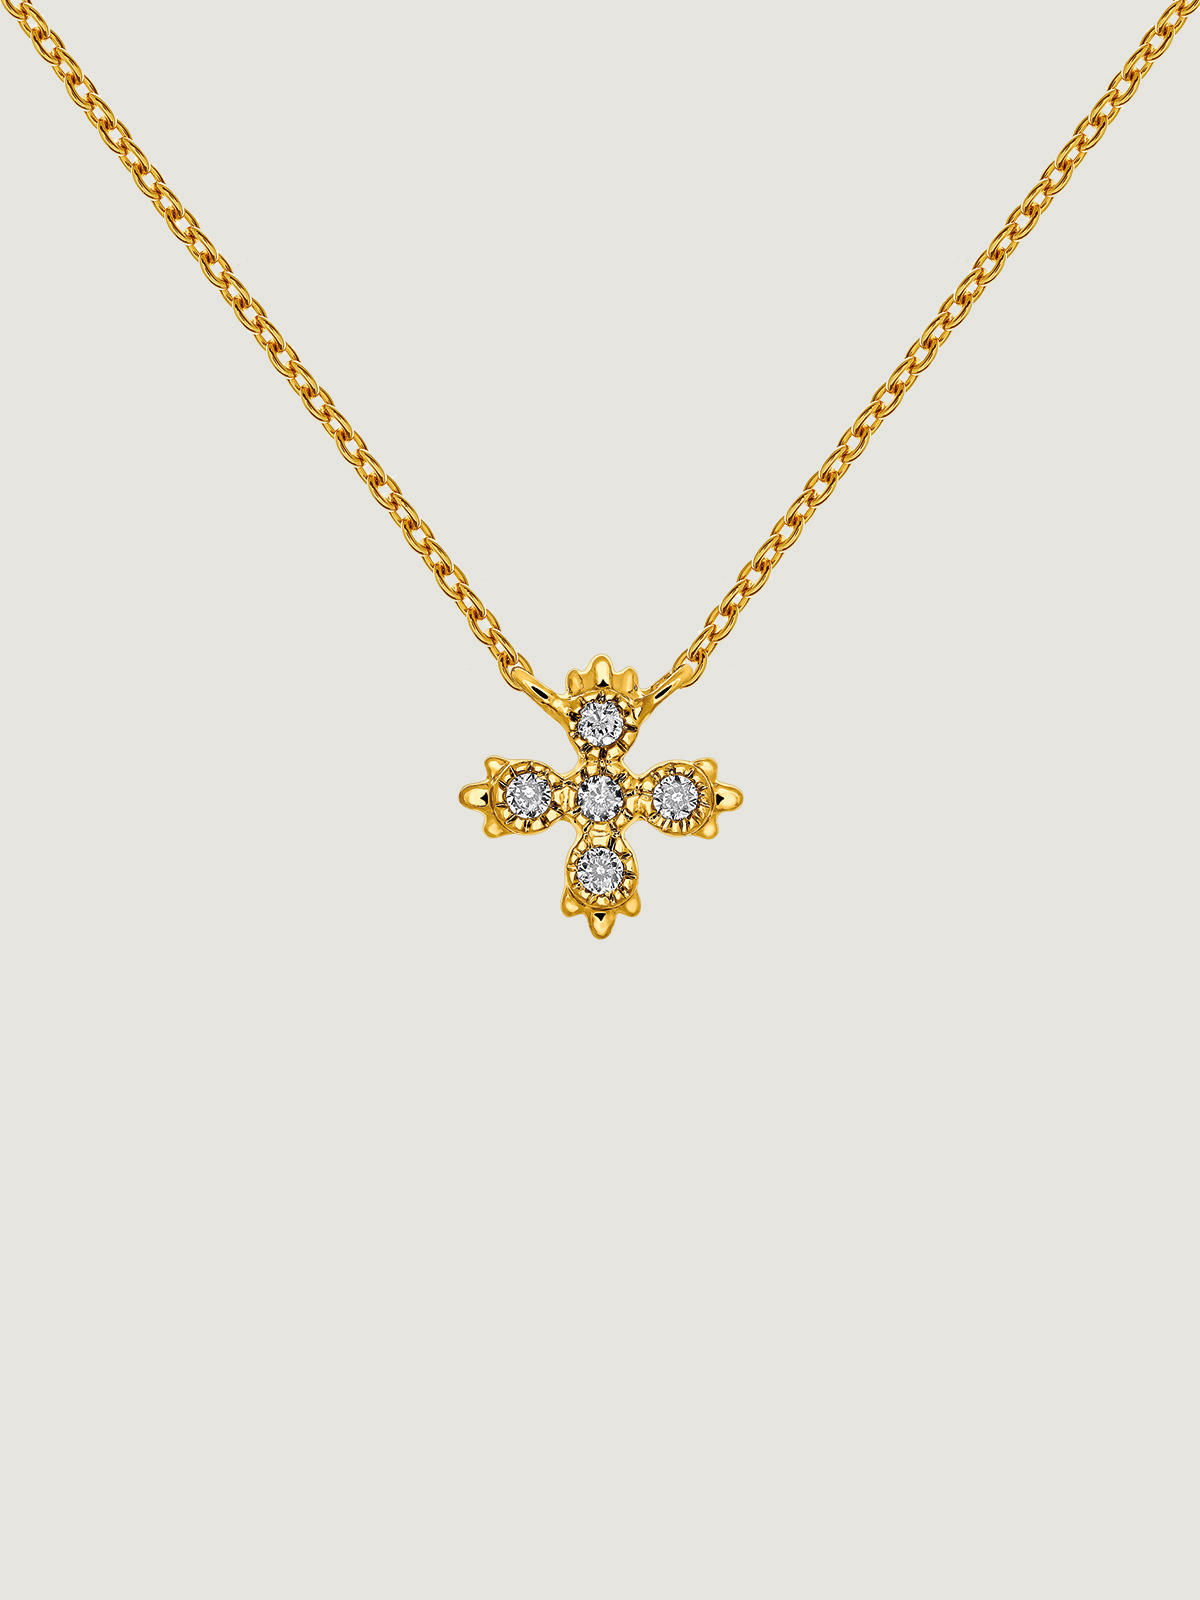 9K yellow gold pendant with diamond cross.